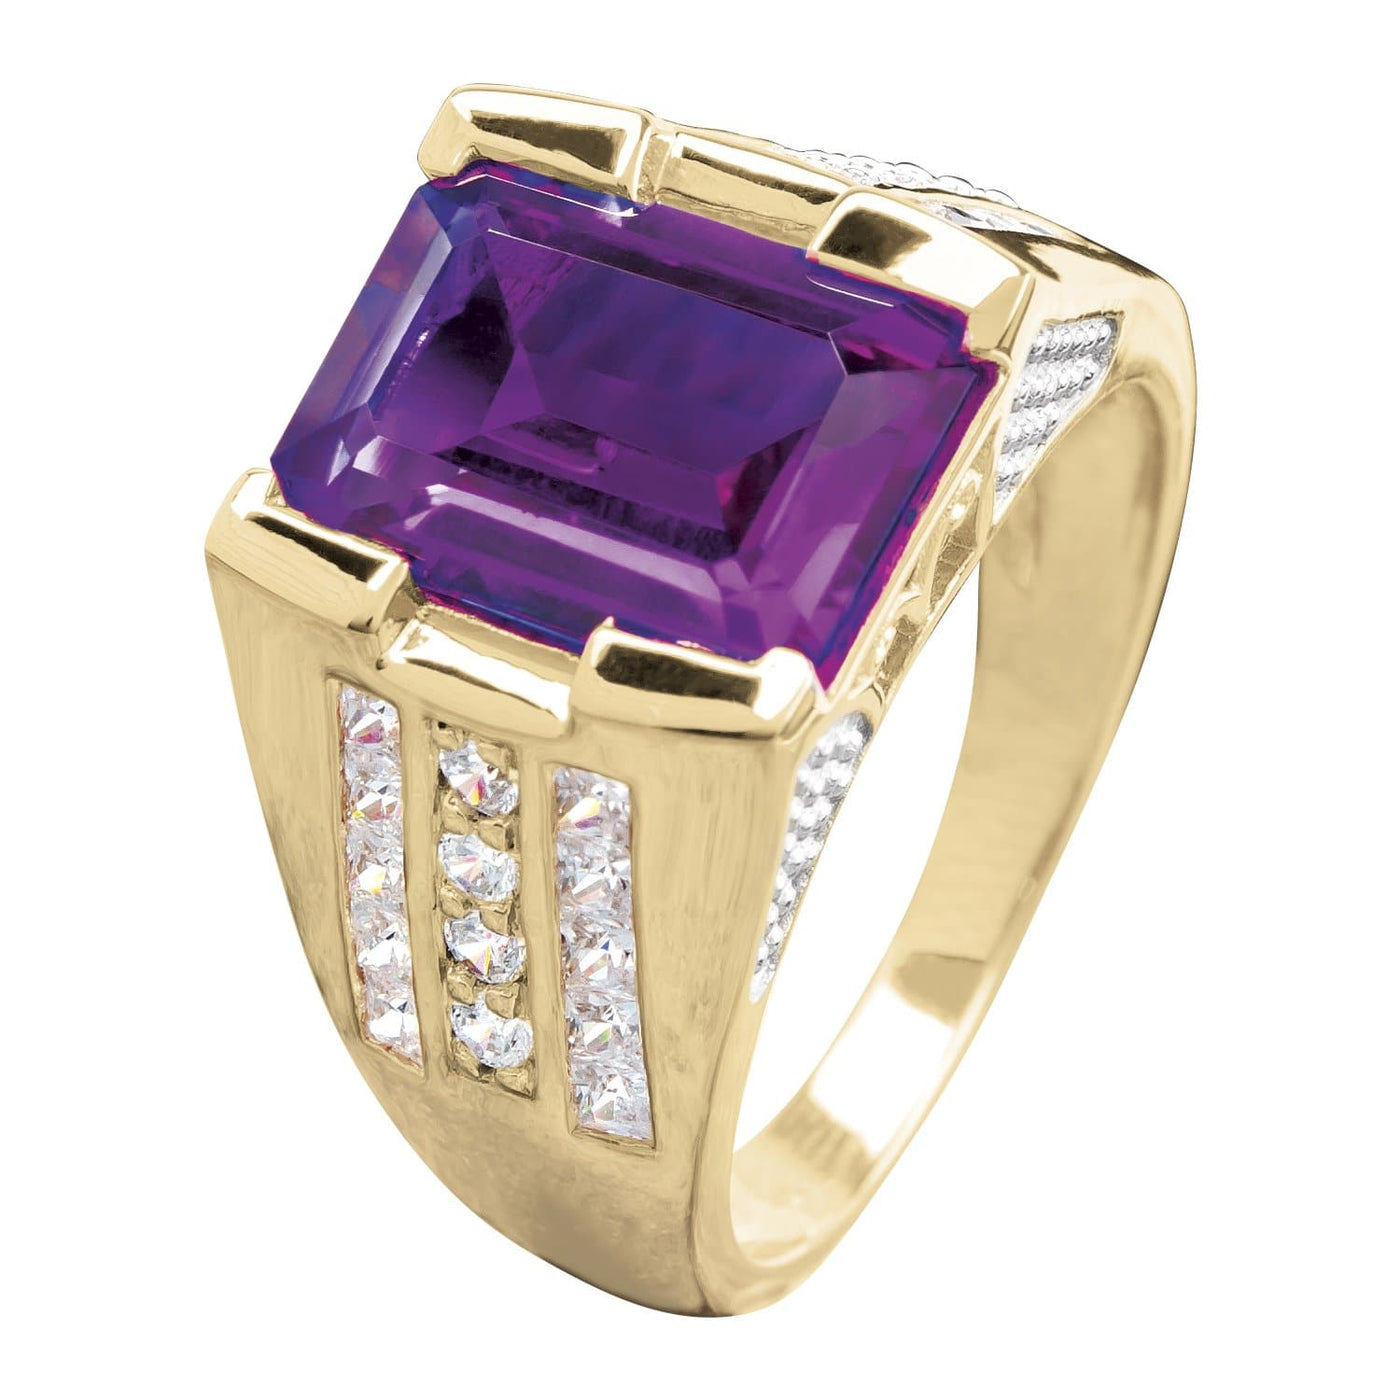 Daniel Steiger Supreme Purple Men's Ring